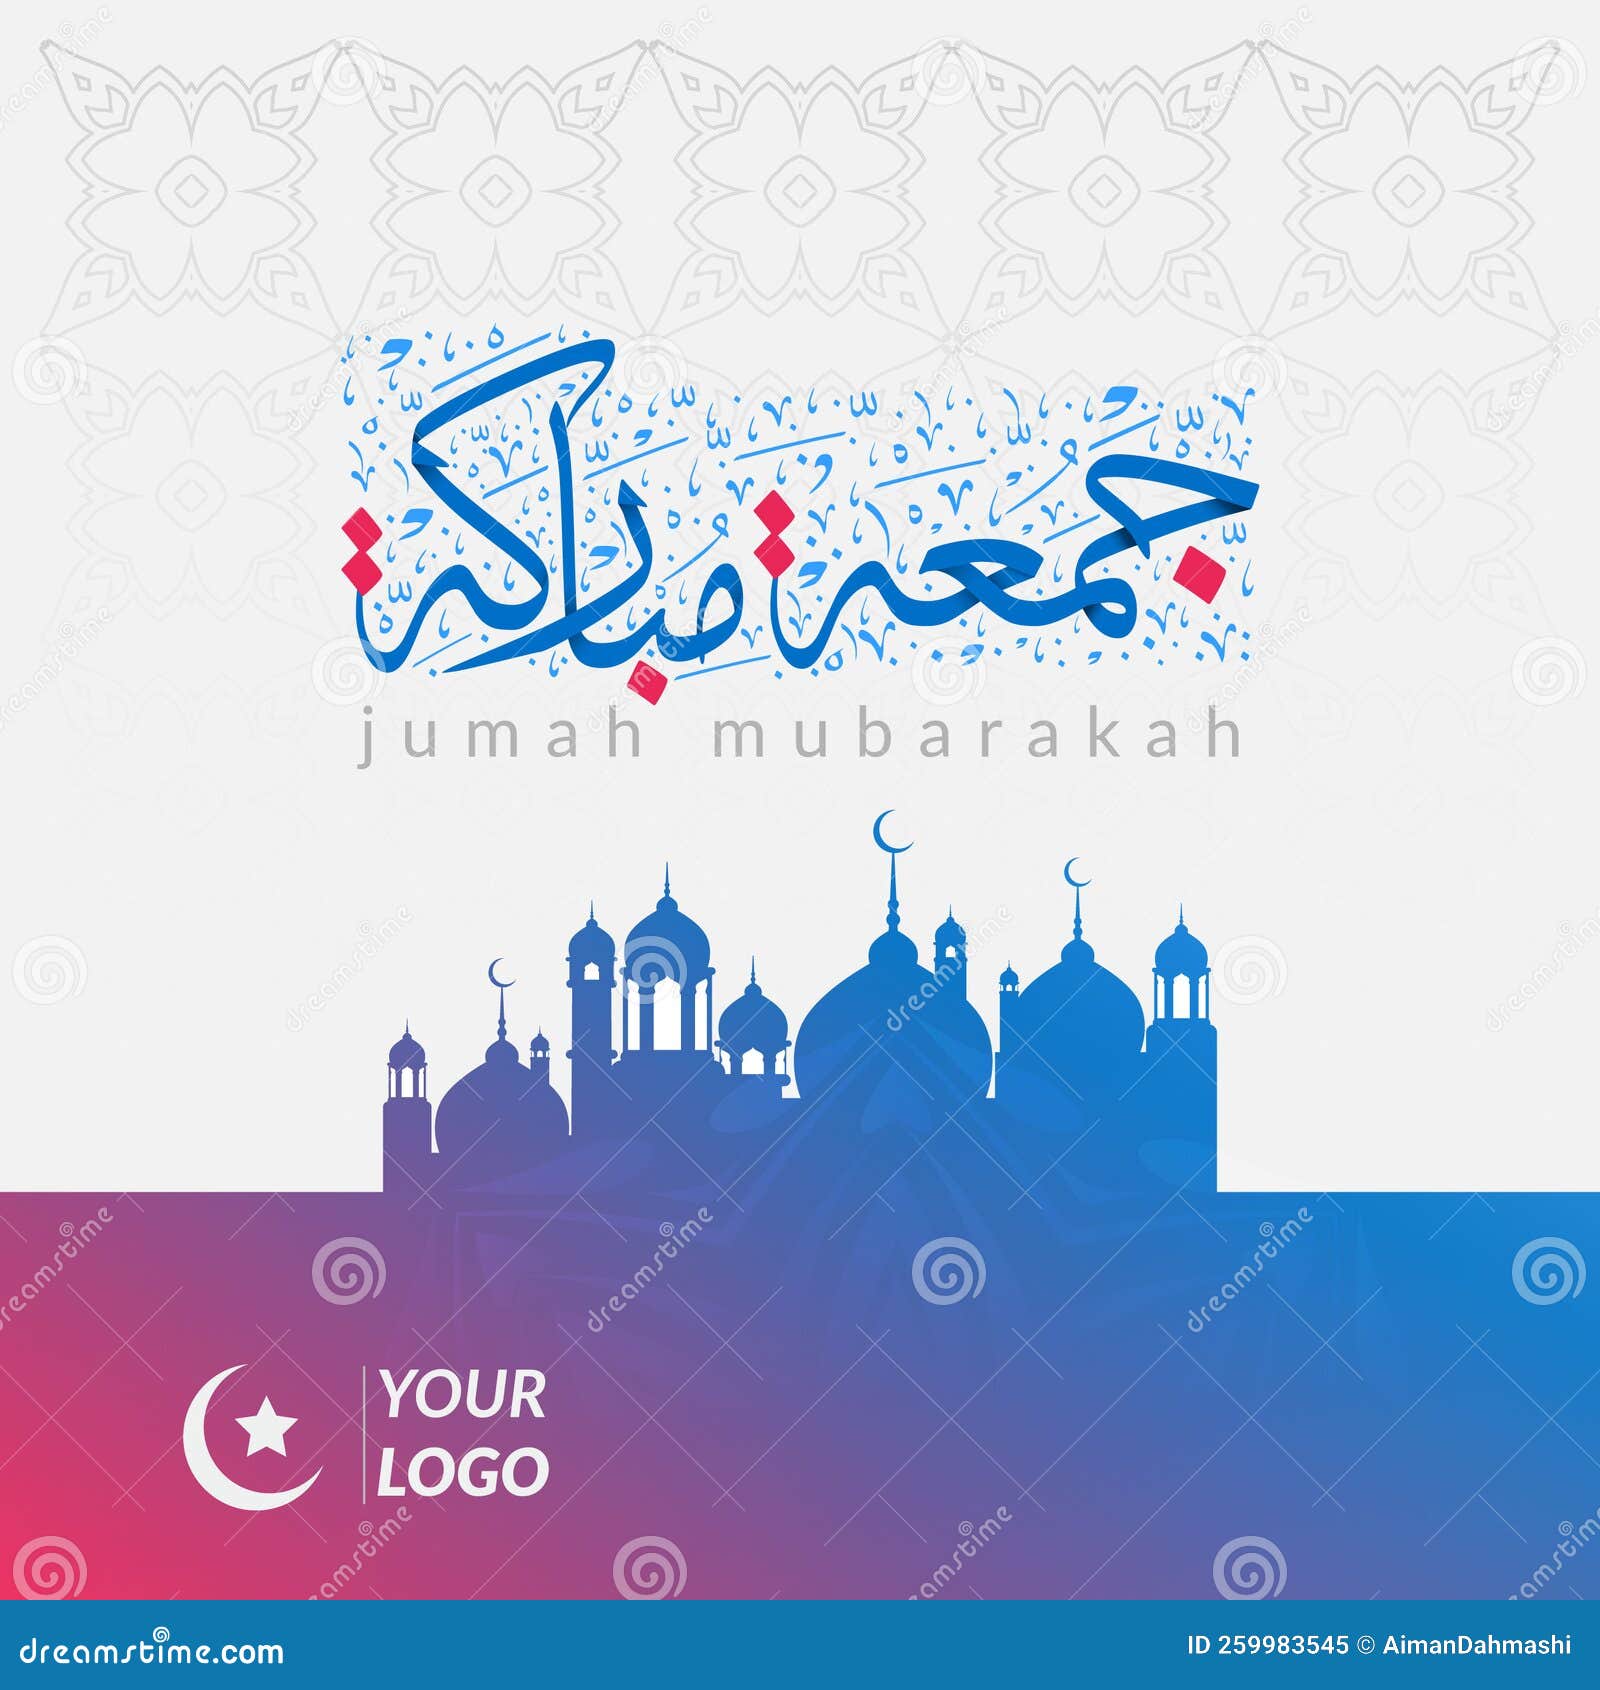 jumah mubarakah, blessed friday, islamic calligraphy